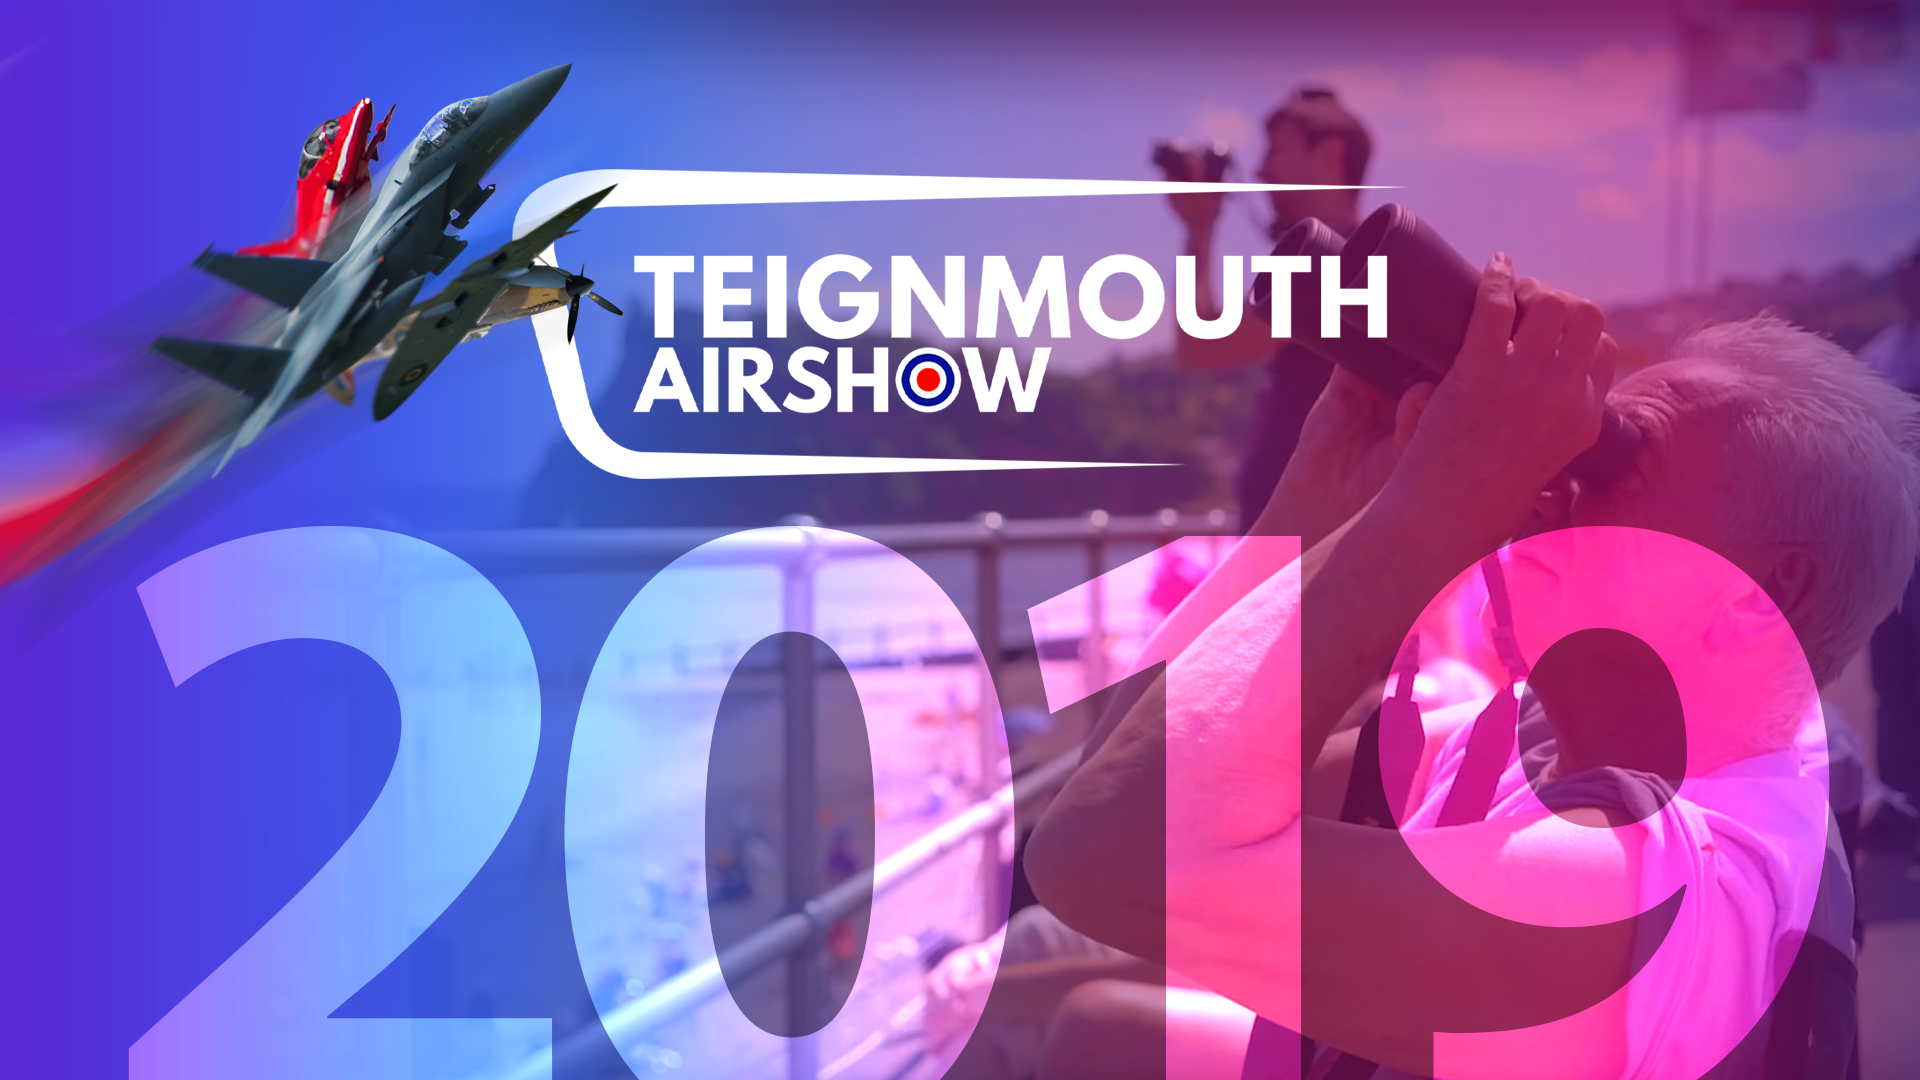 Teignmouth Airshow 2019